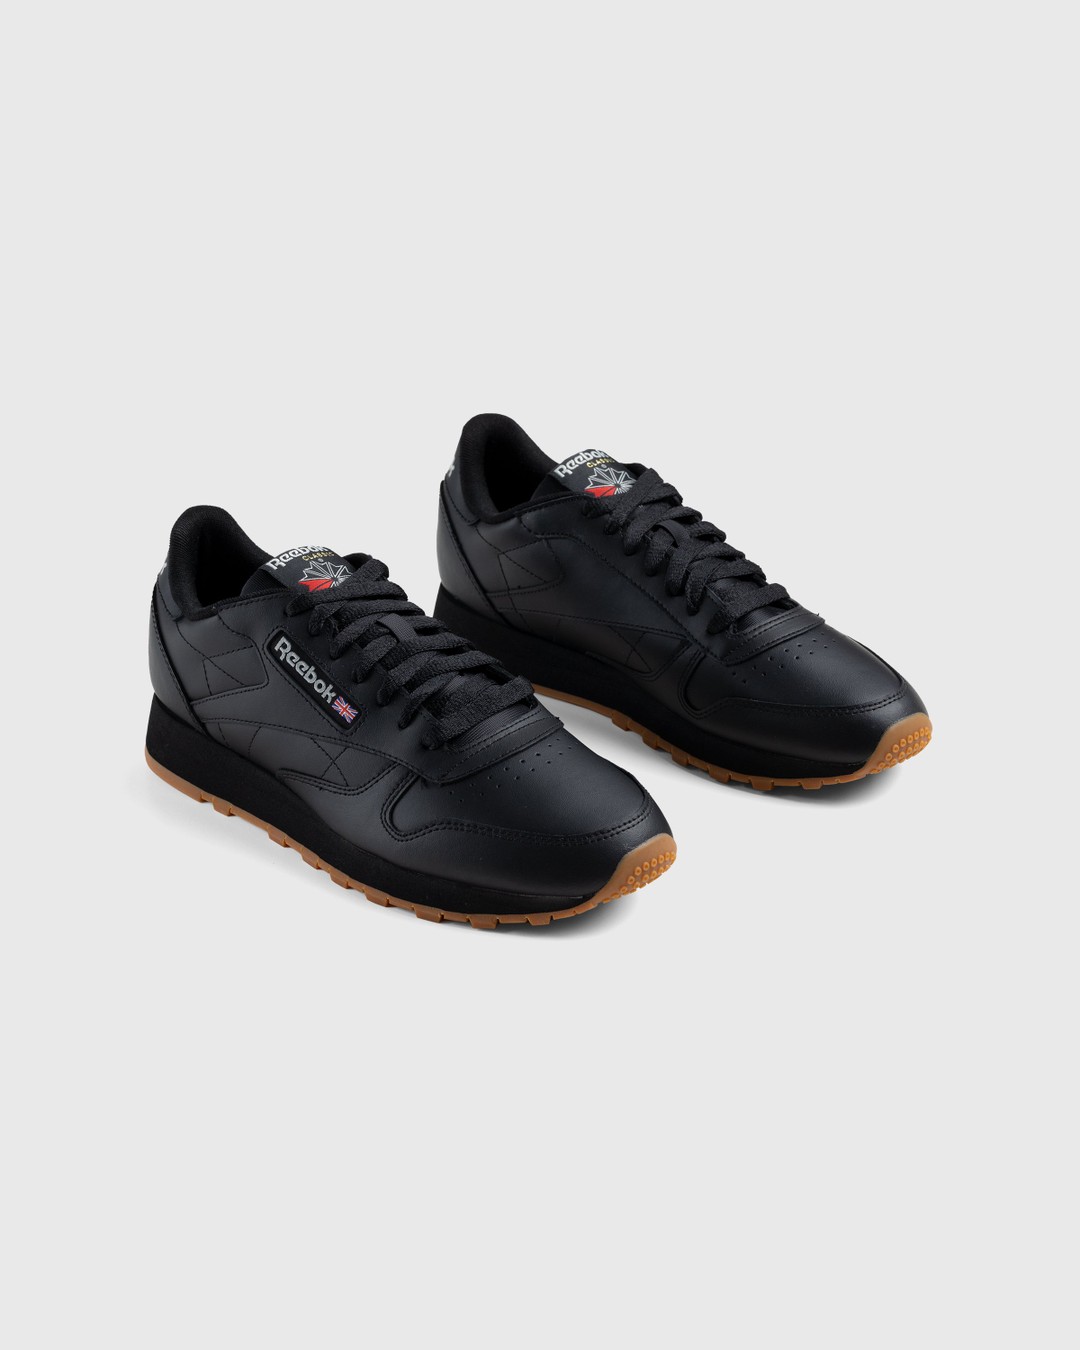 Reebok – Classic Leather Black - Low Top Sneakers - Black - Image 2